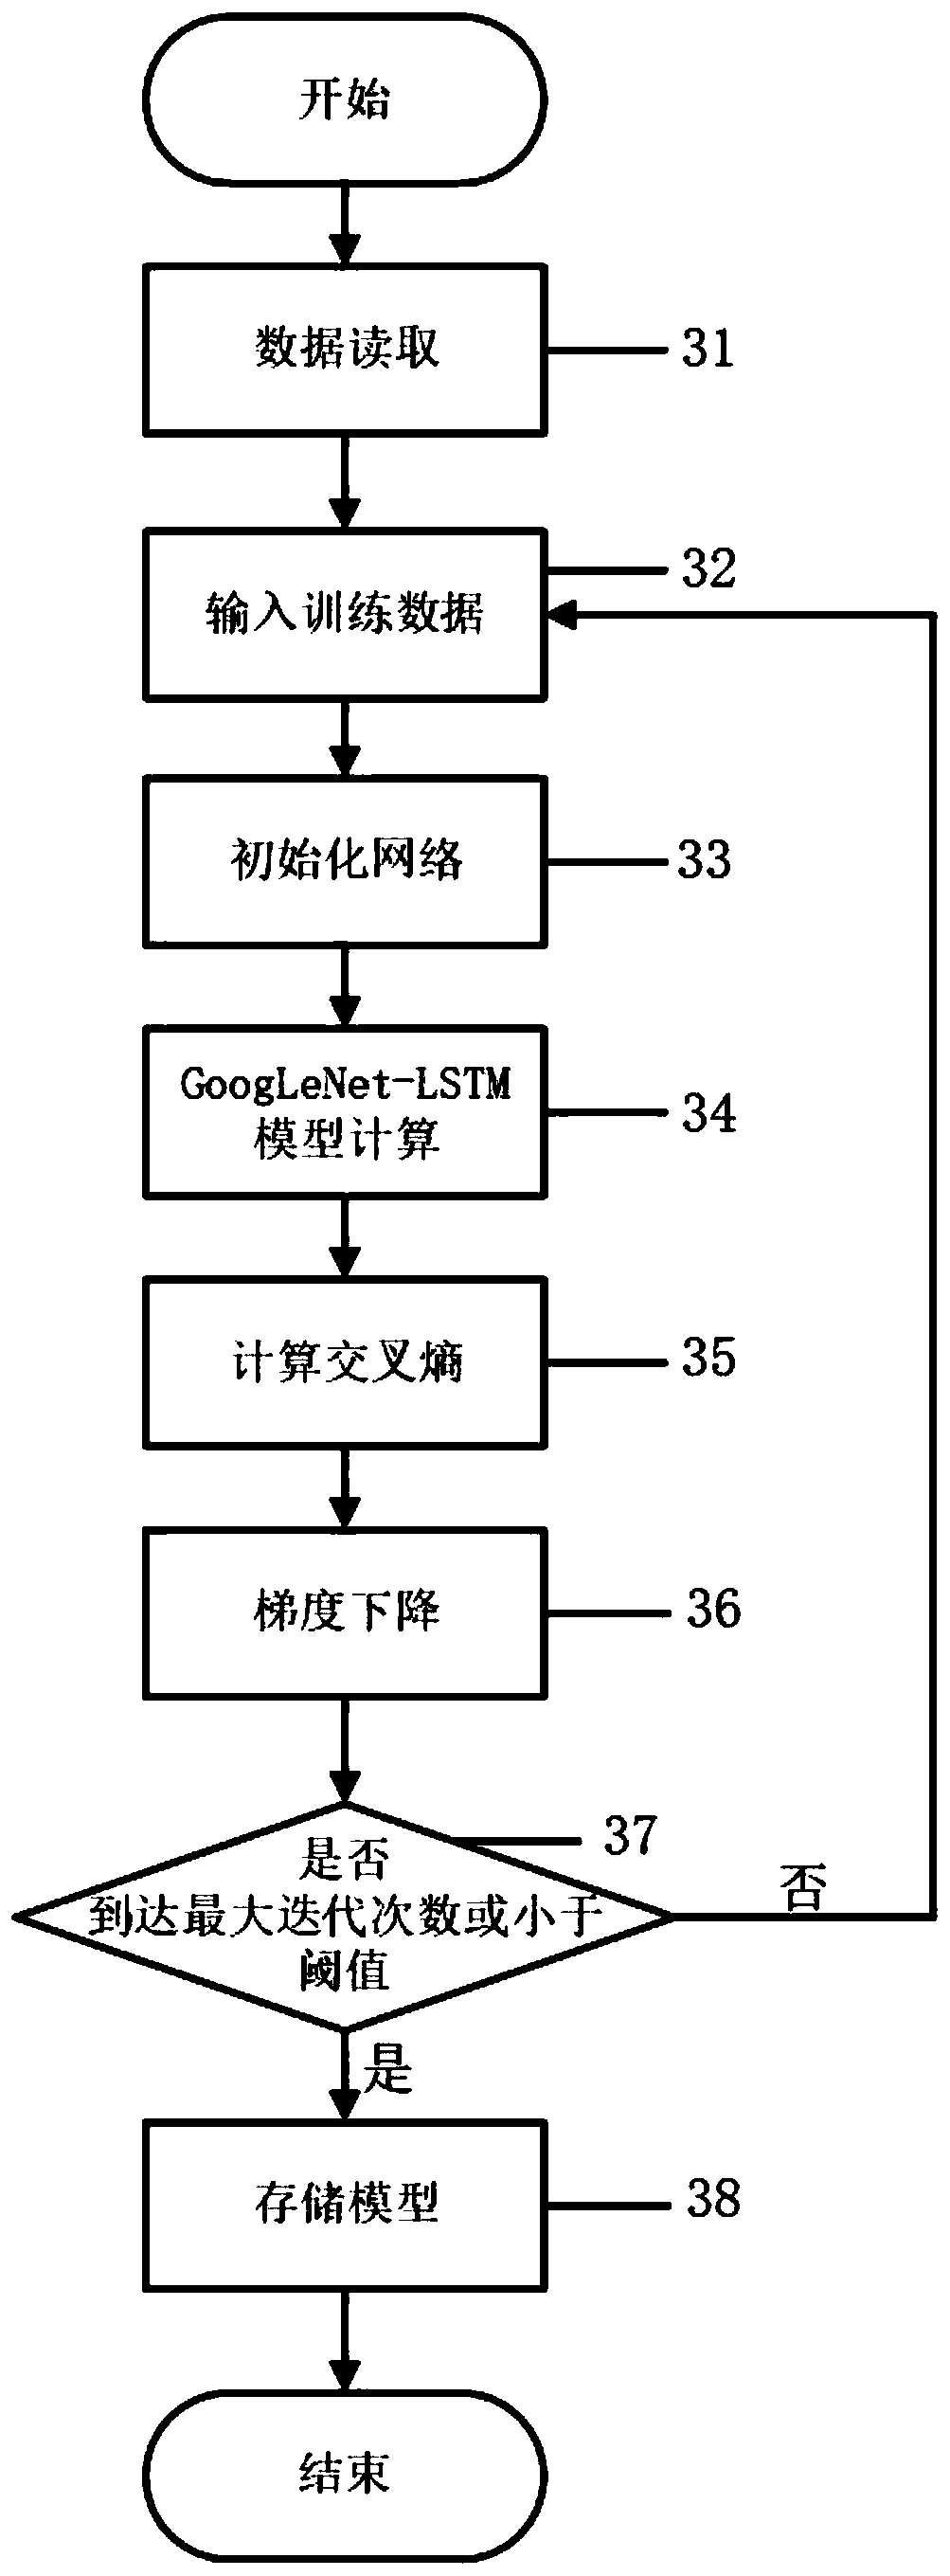 Industrial control intrusion detection method based on multi-classification GoogLeNet-LSTM model